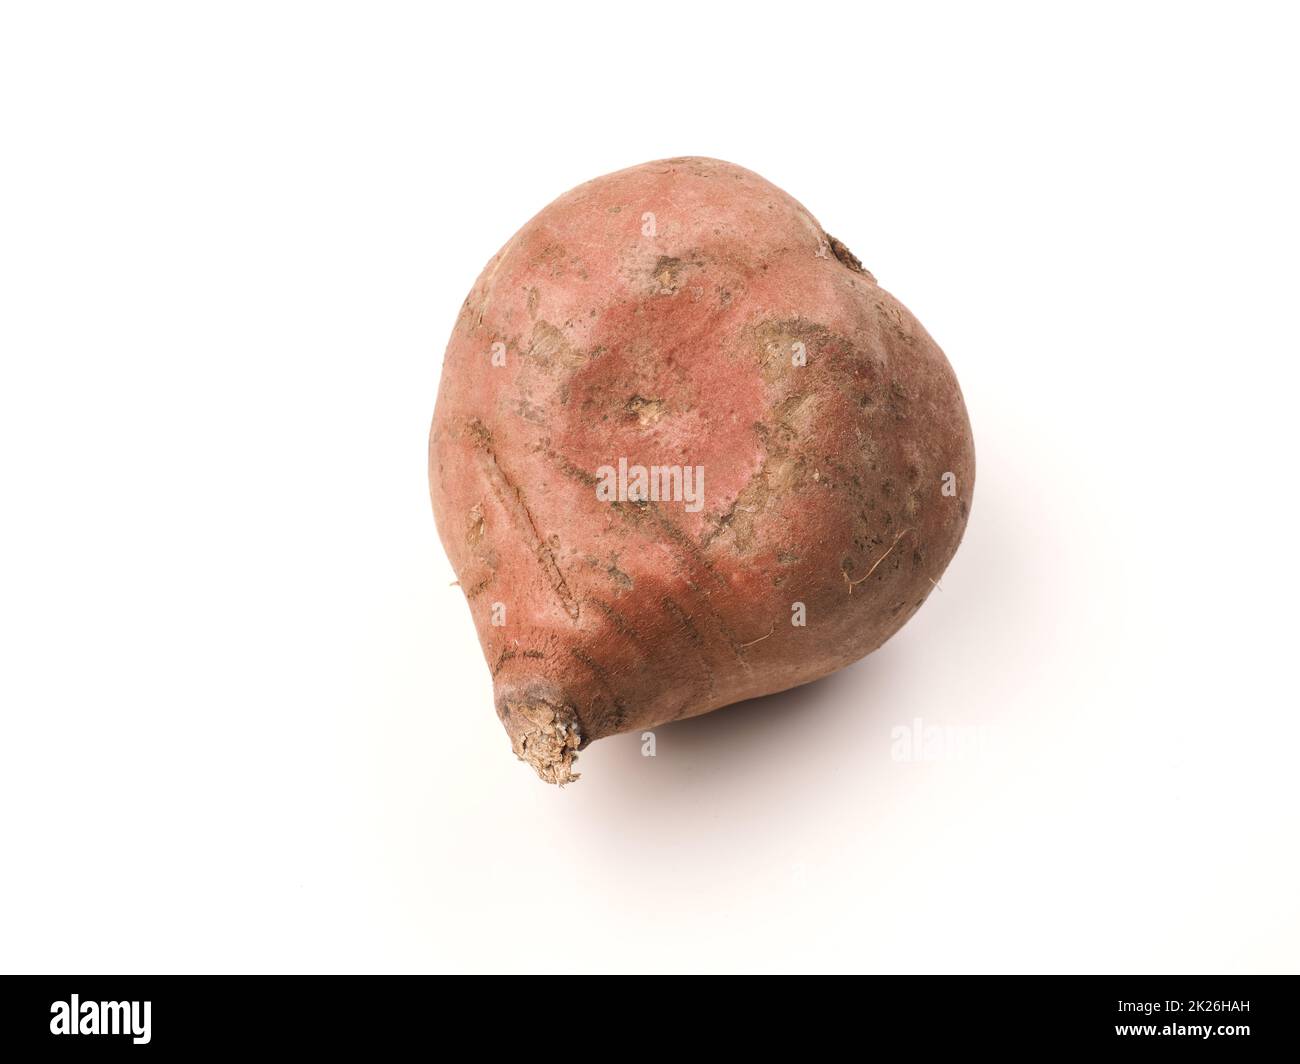 A heart shaped sweet potato on a white studio background Stock Photo